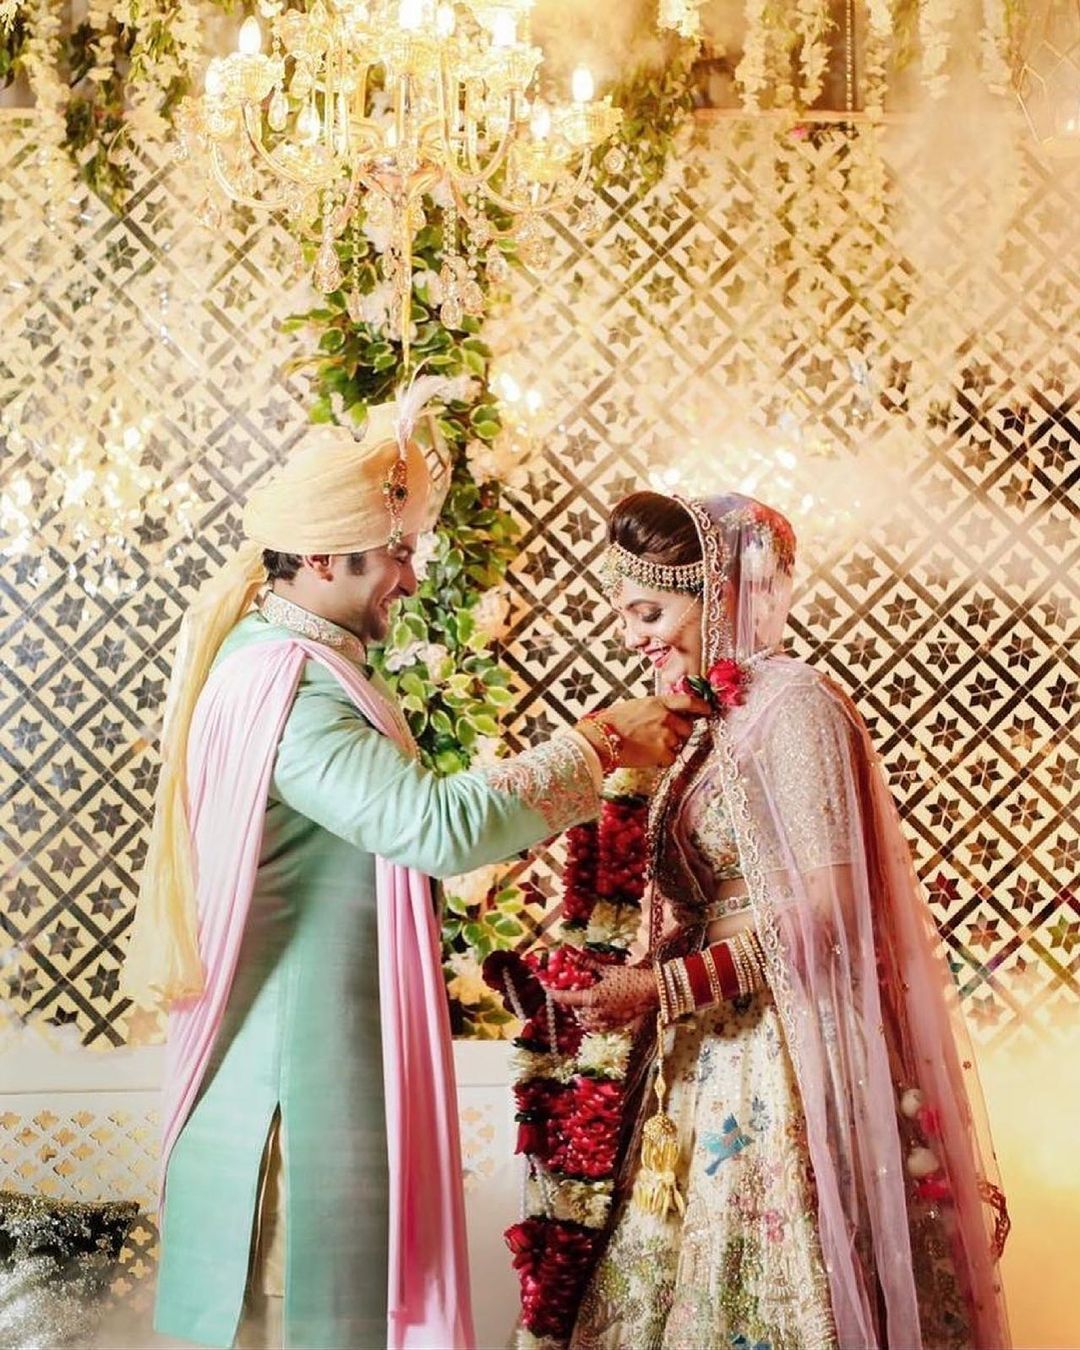 "Your Life, My Rules", Newly Wed Sugandha Mishra Tells Husband Sanket Bhosale Sharing Their First Wedding Photo